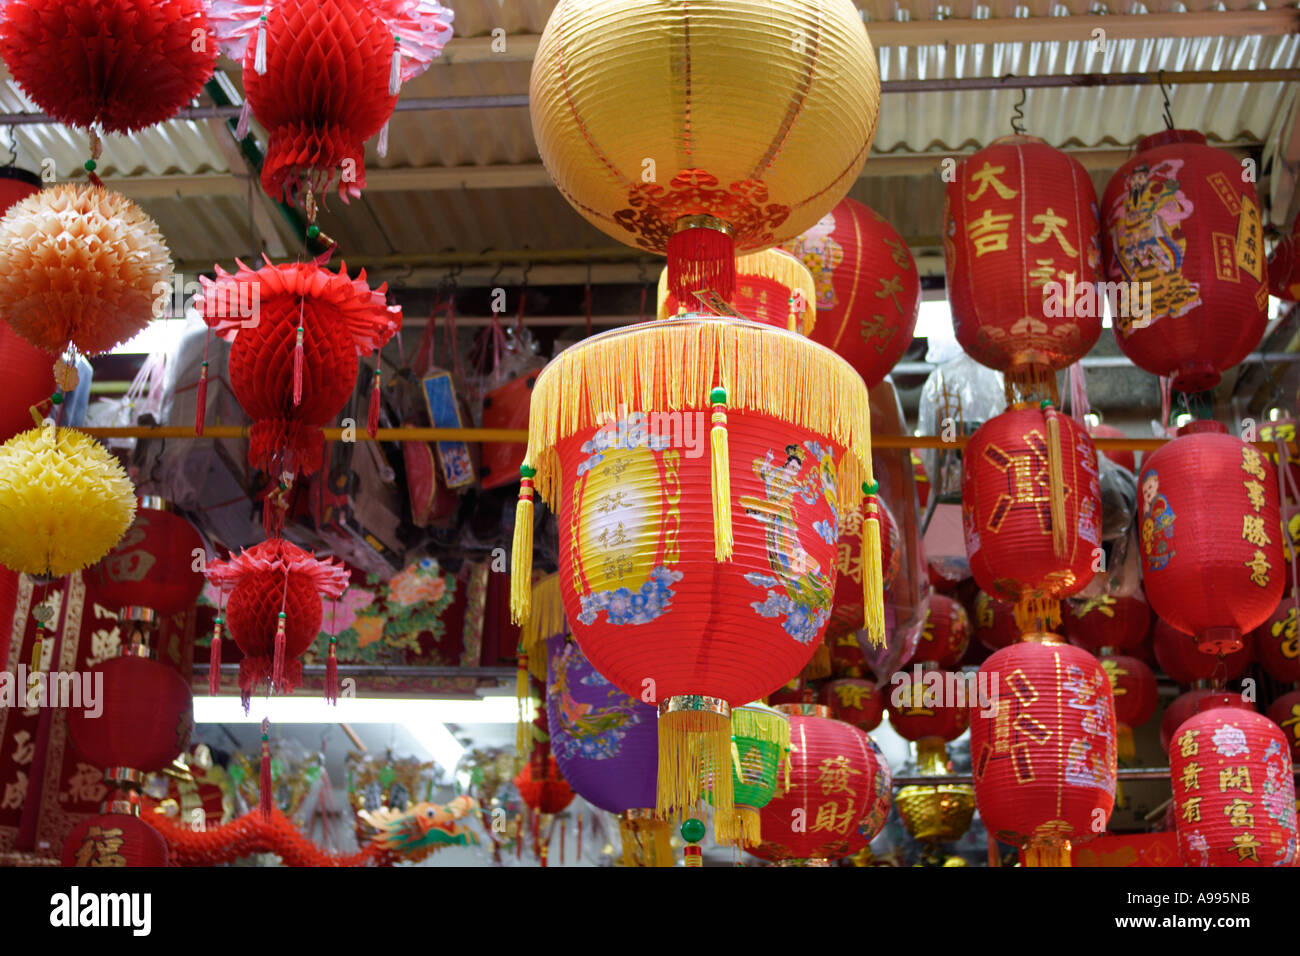 Paper Lanterns for Sale Street Market Sheung Wan Kowloon Hong Kong China  Stock Photo - Alamy